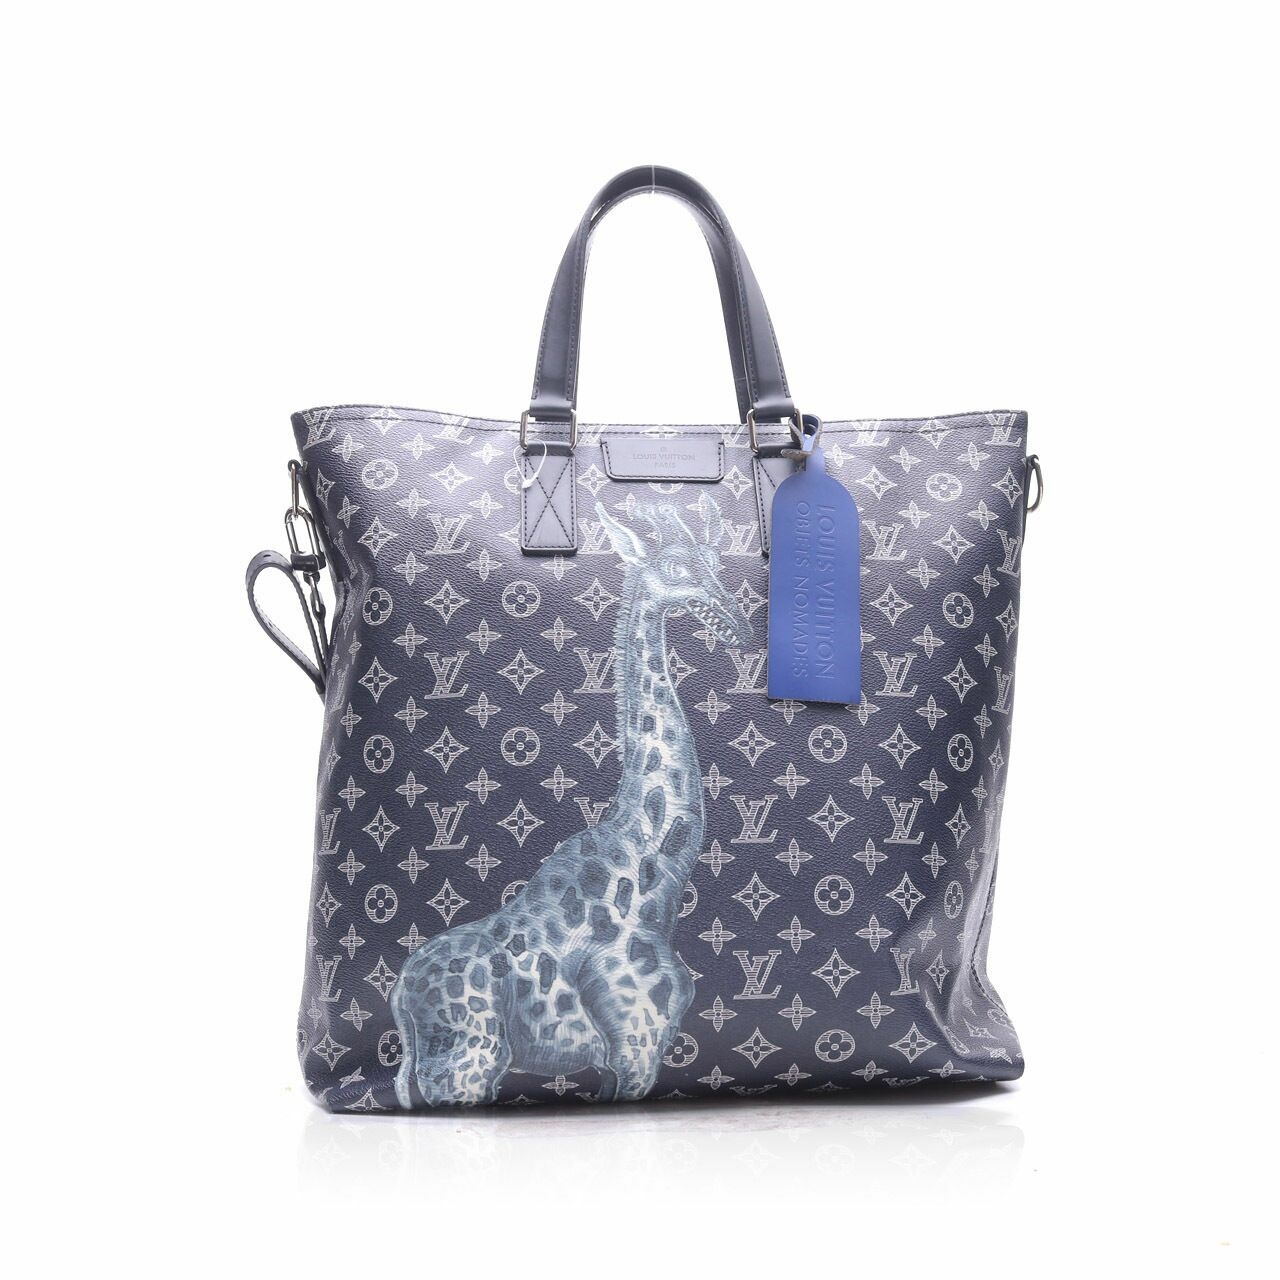  Louis Vuitton Chapman Brothers Giraffe Navy Blue Canvas Tote Satchel Bag 